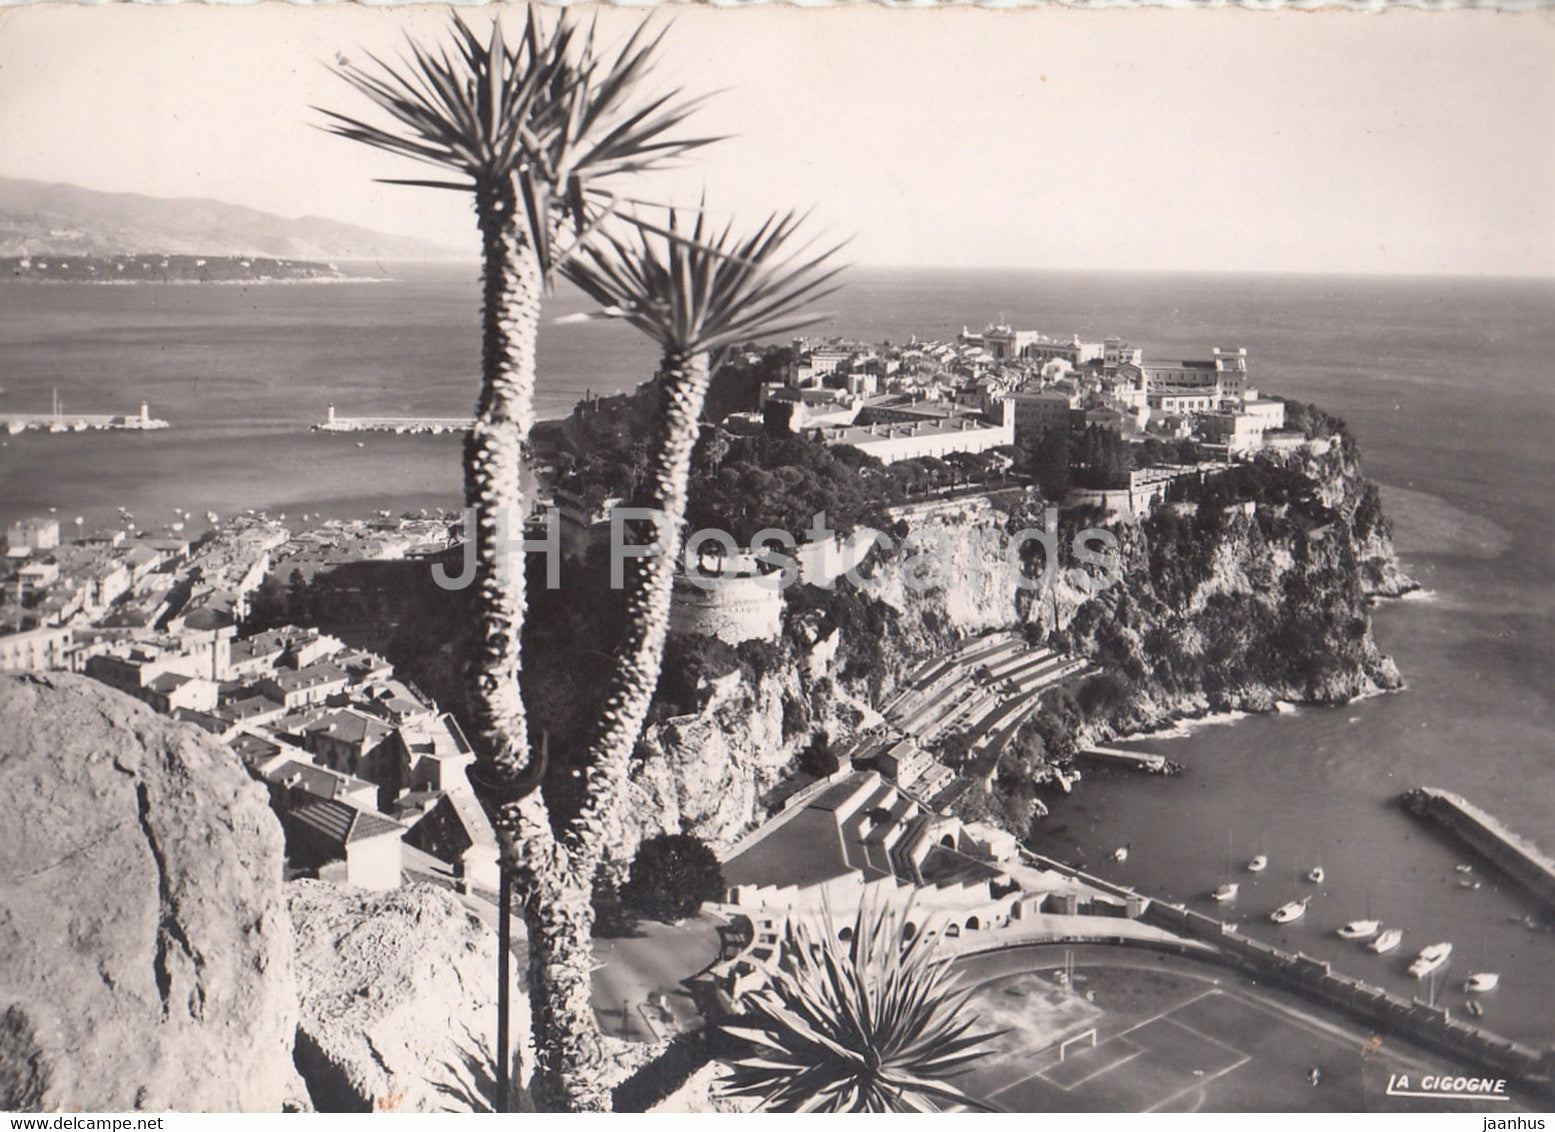 Le Rocher - old postcard - 1952 - Monaco - used - JH Postcards